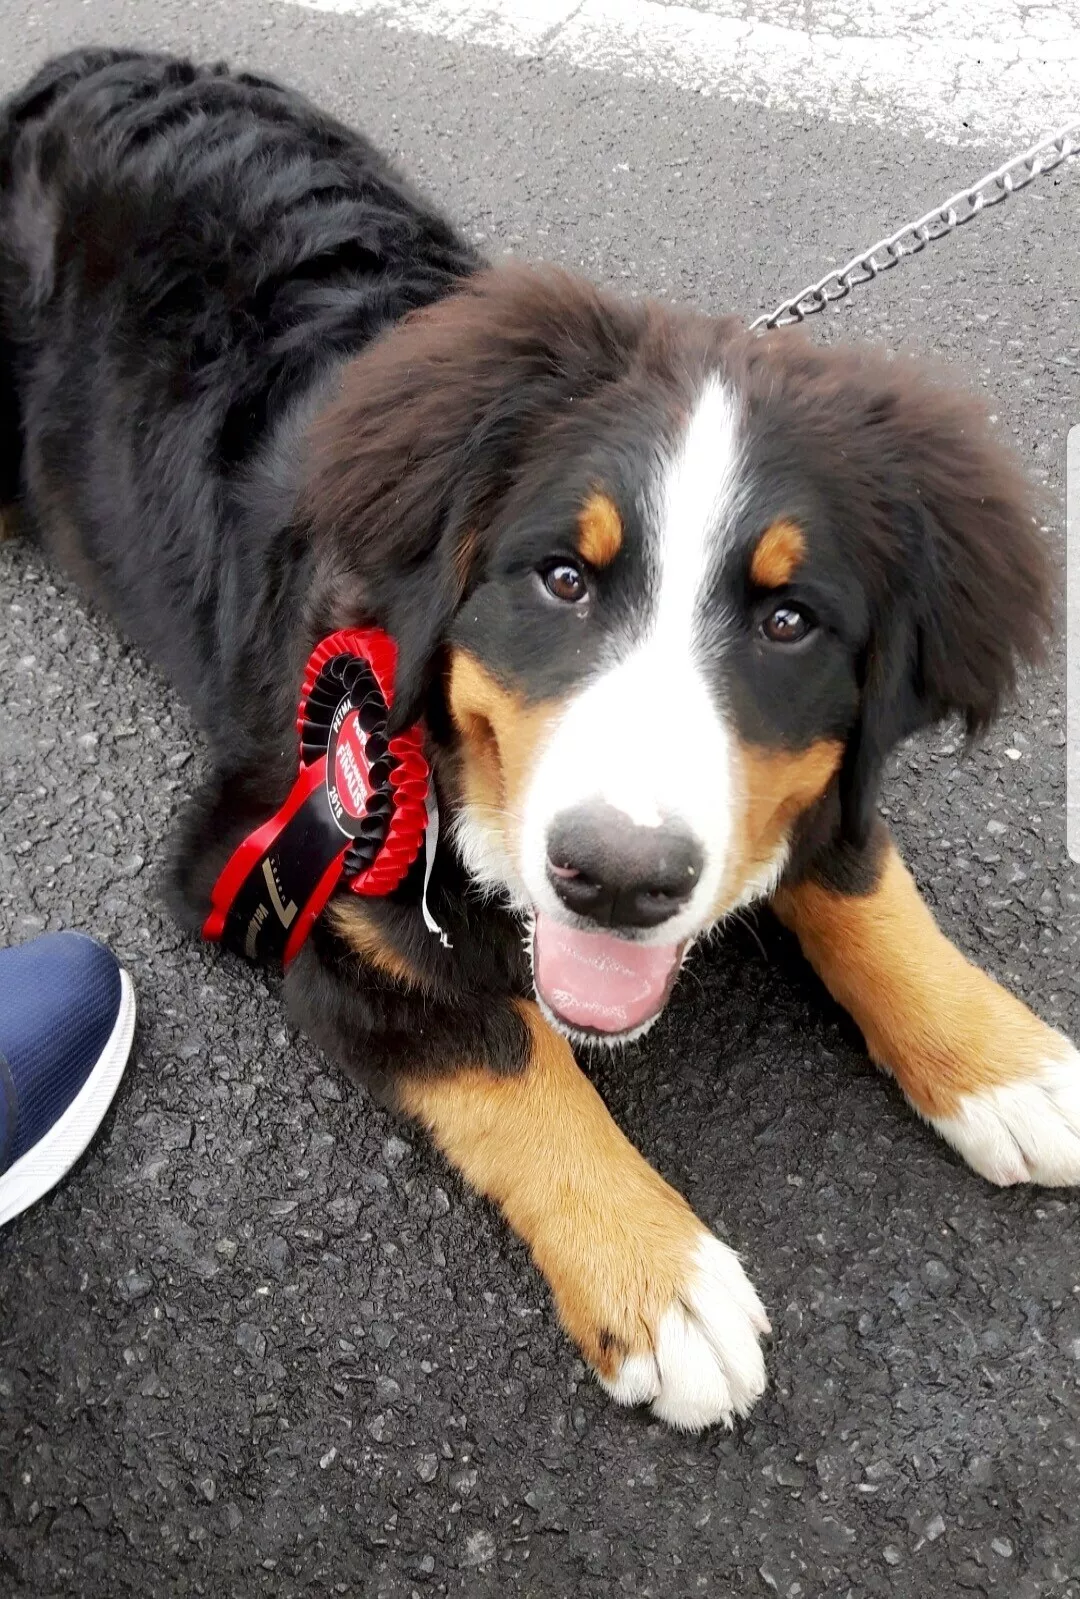 Meet Ireland’s Puppy of the Year 2018